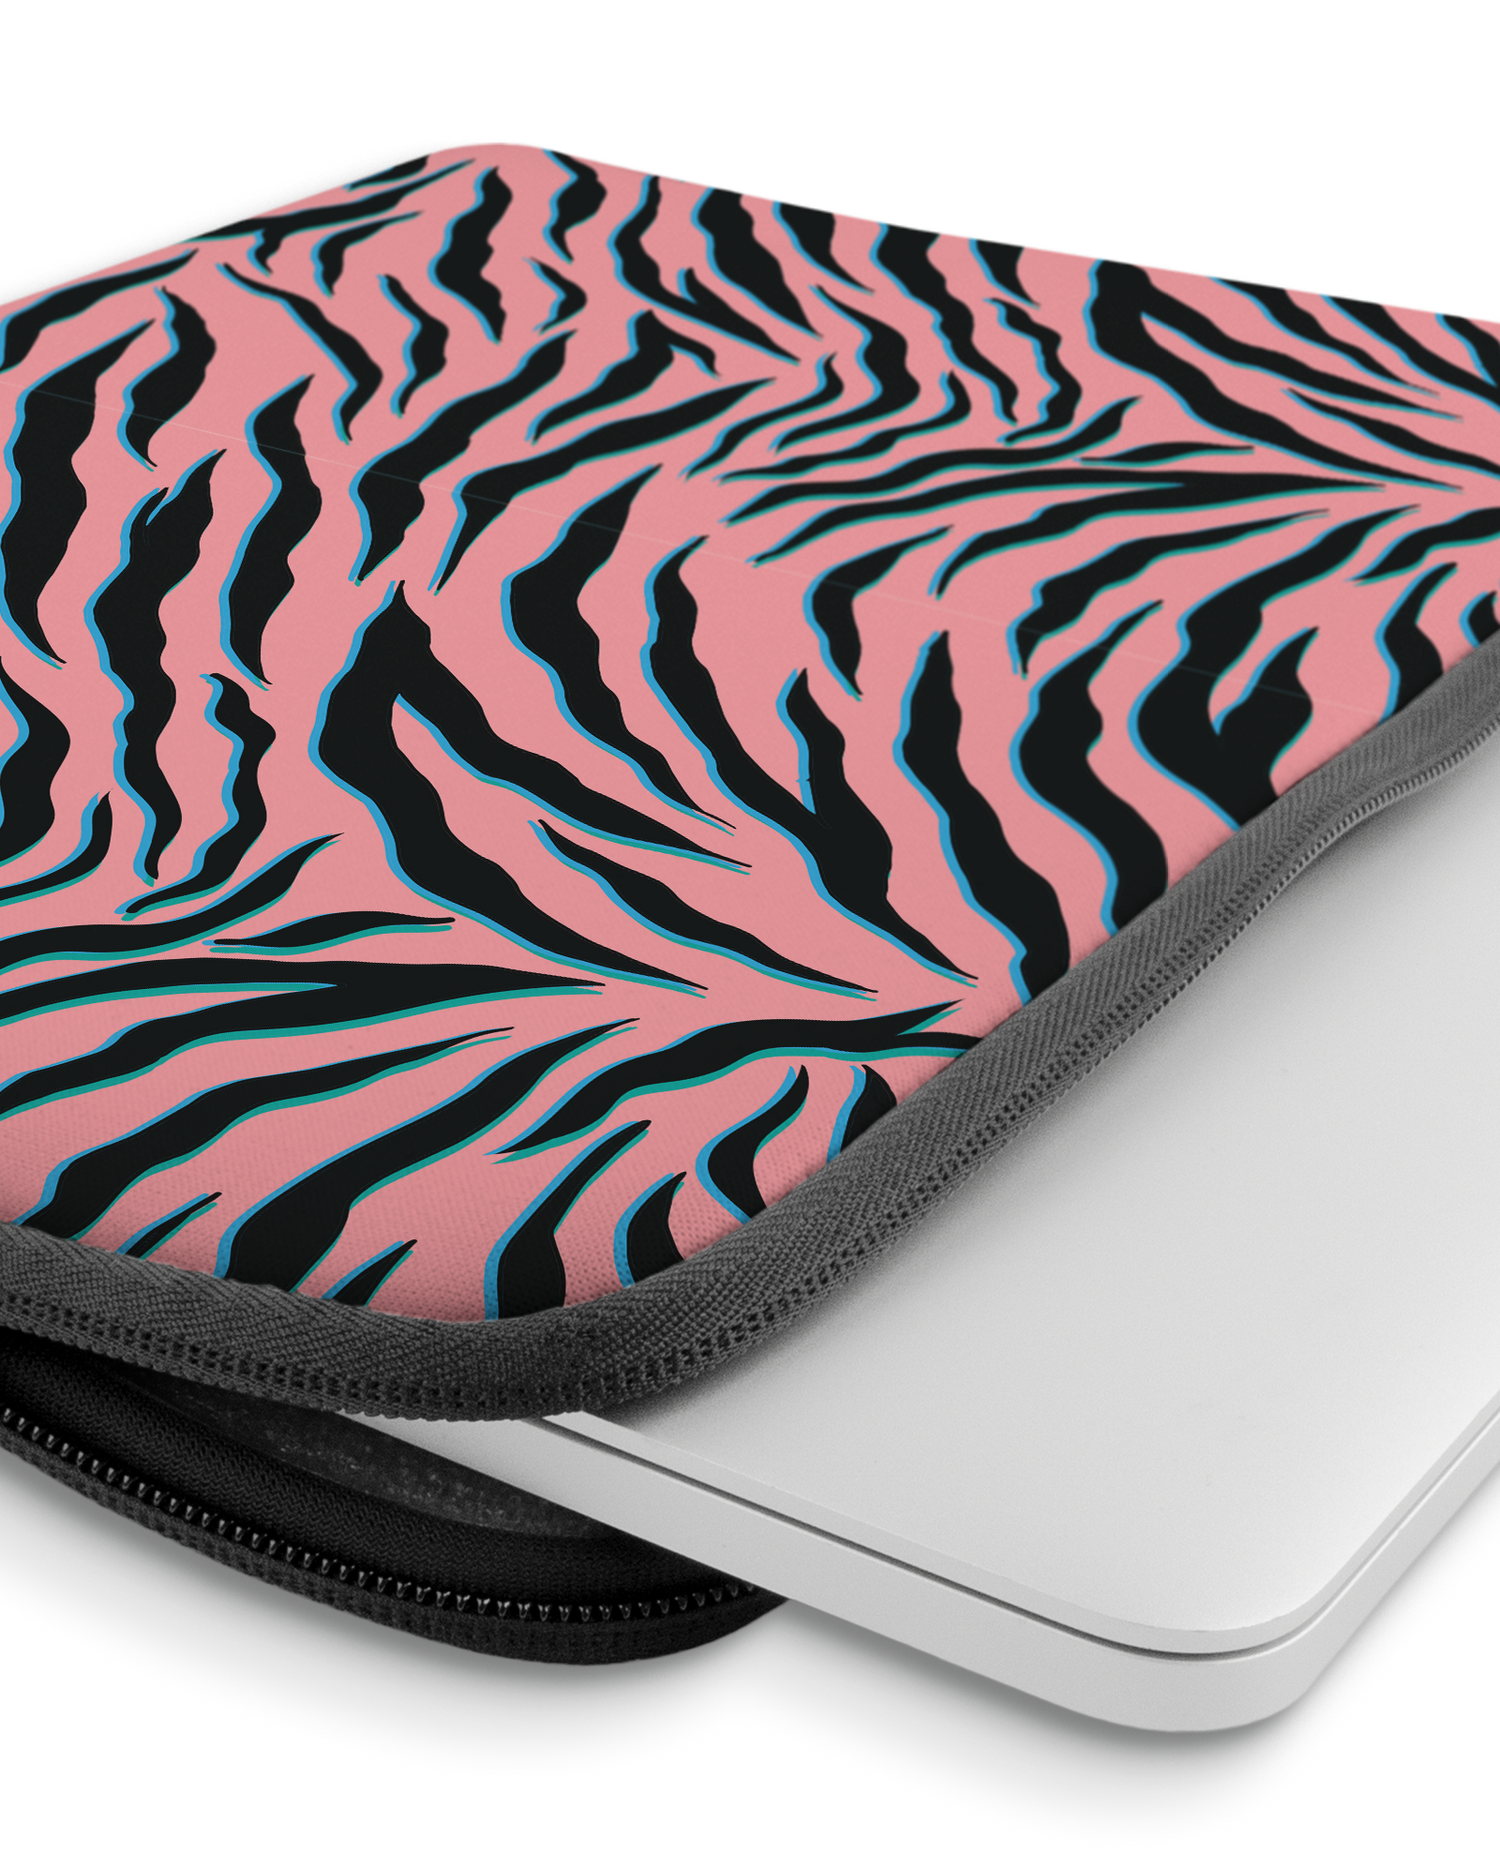 Pink Zebra Laptop Case 14 inch with device inside